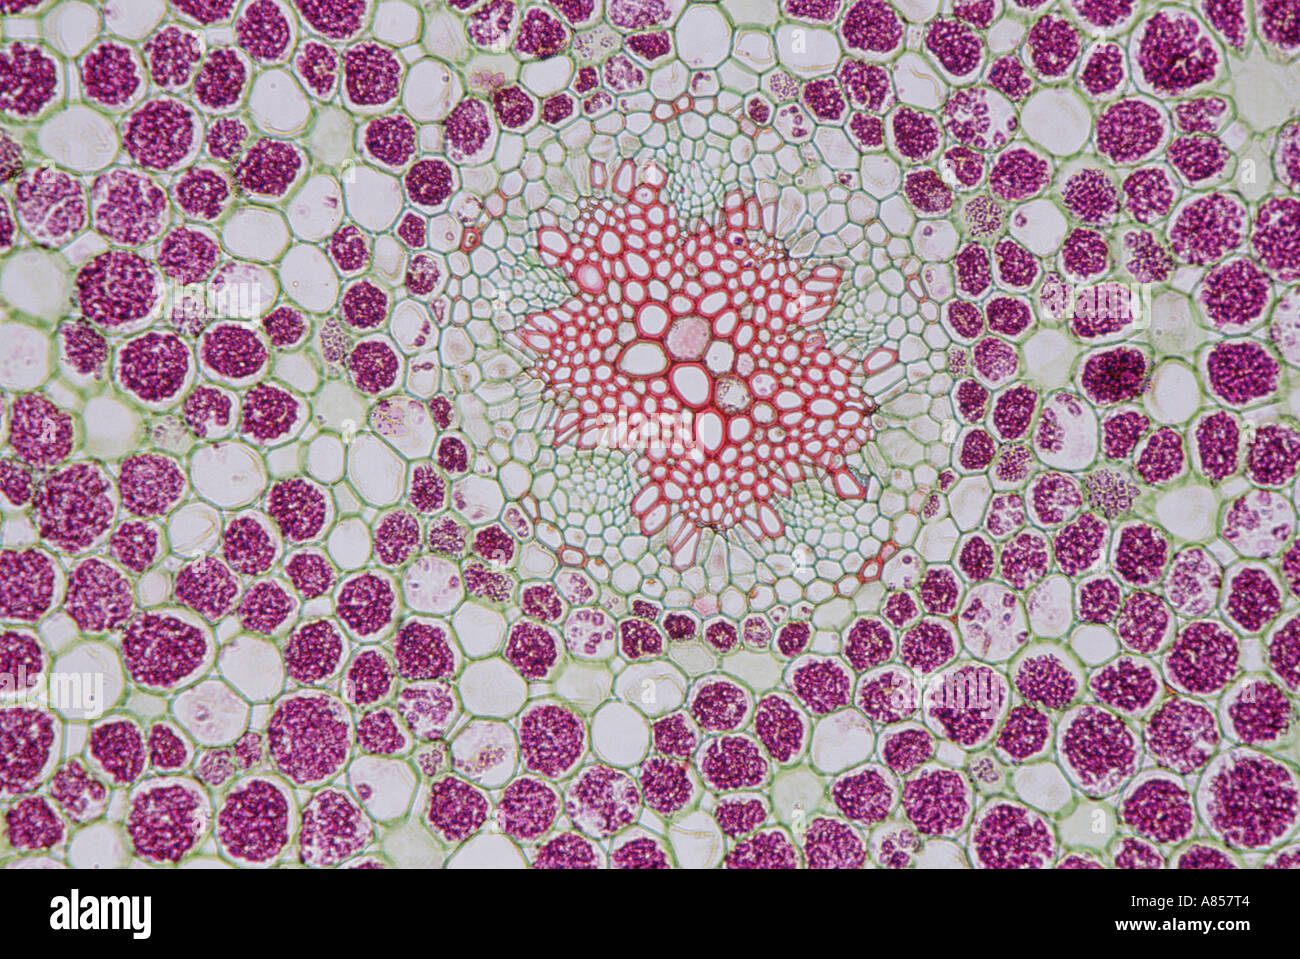 Scanning Electron Schliffbild (SEM) Pflanze Kreuz Abschnitt zeigen Zellen. Stockfoto